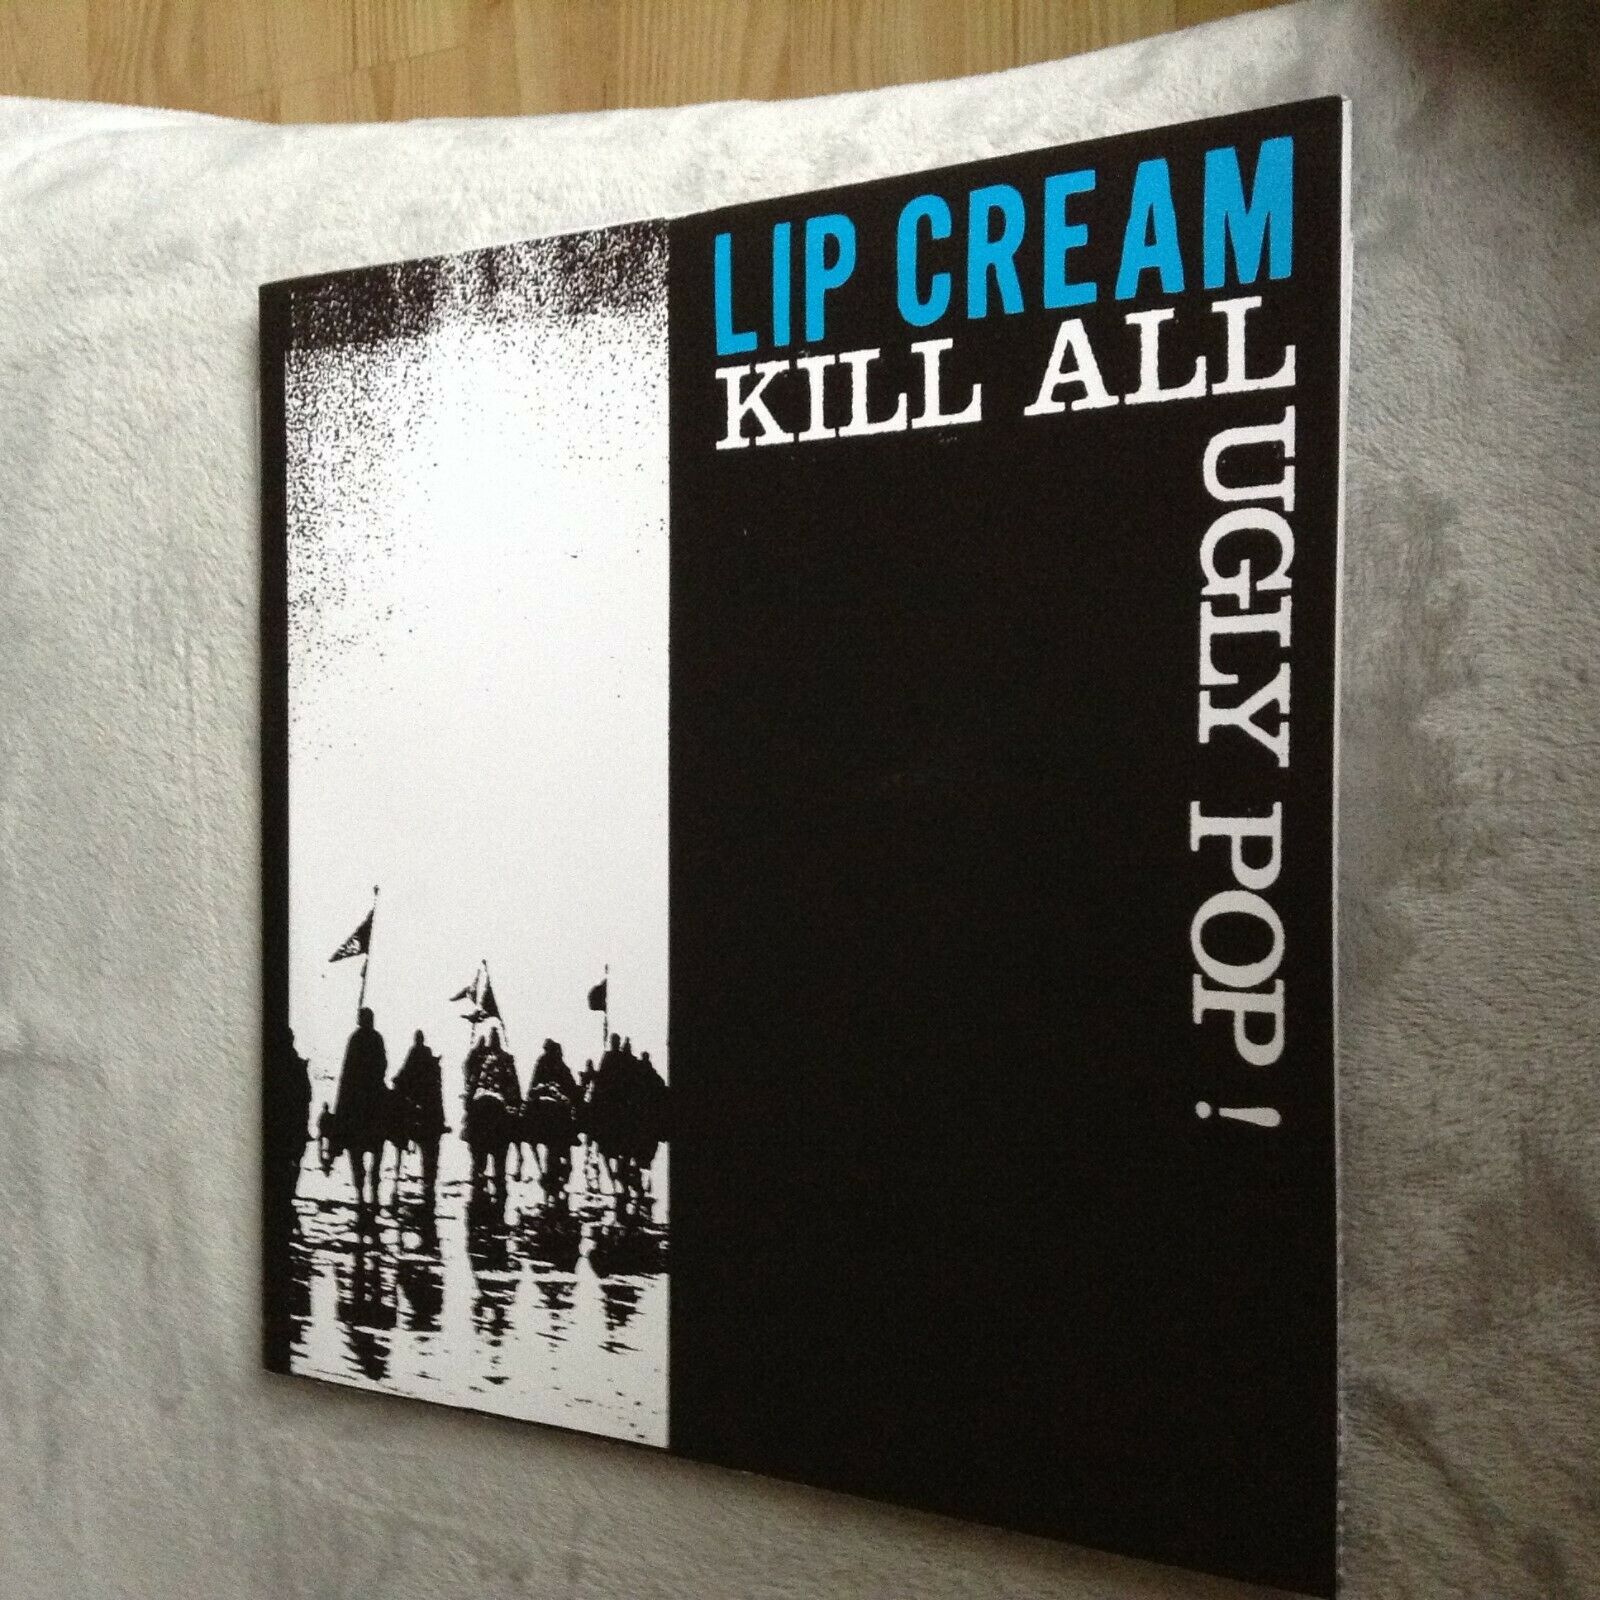 popsike.com - Lip Cream - Kill All Ugly Pop (2 x LP) re